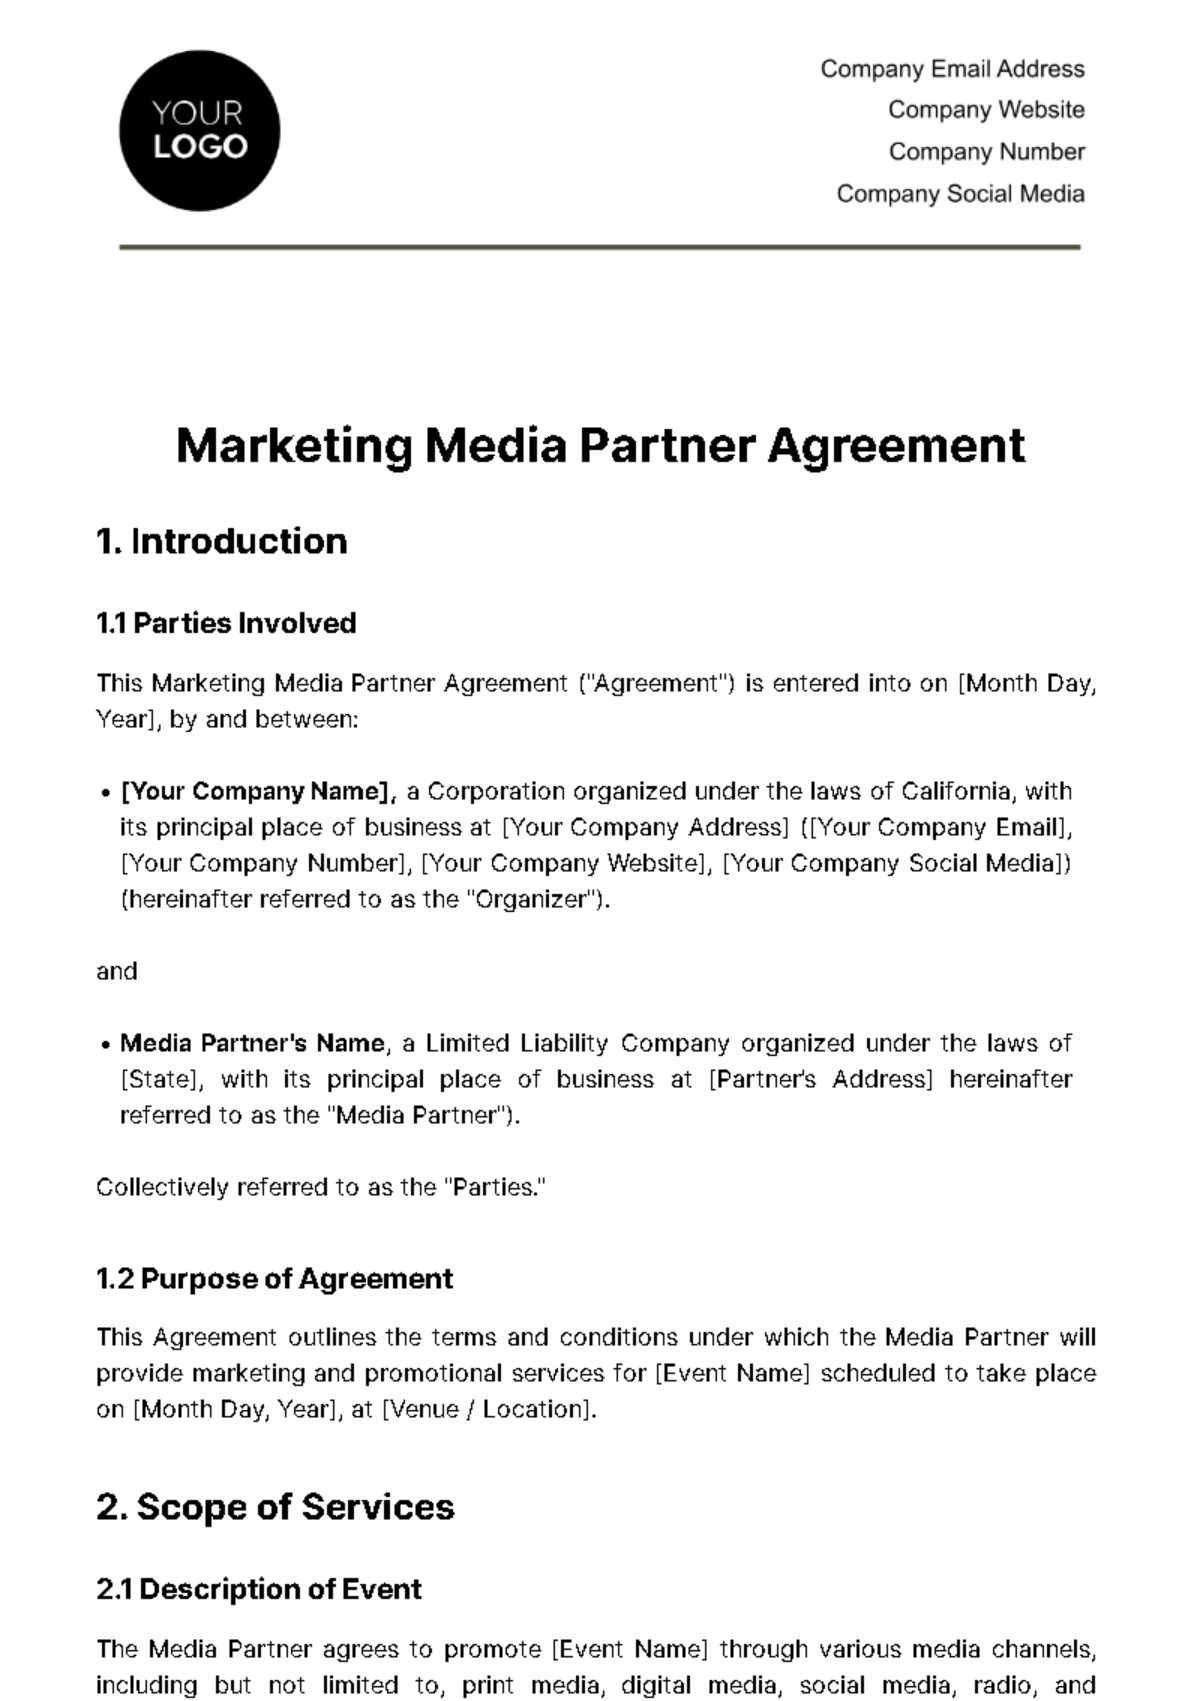 Marketing Media Partner Agreement for Event Template